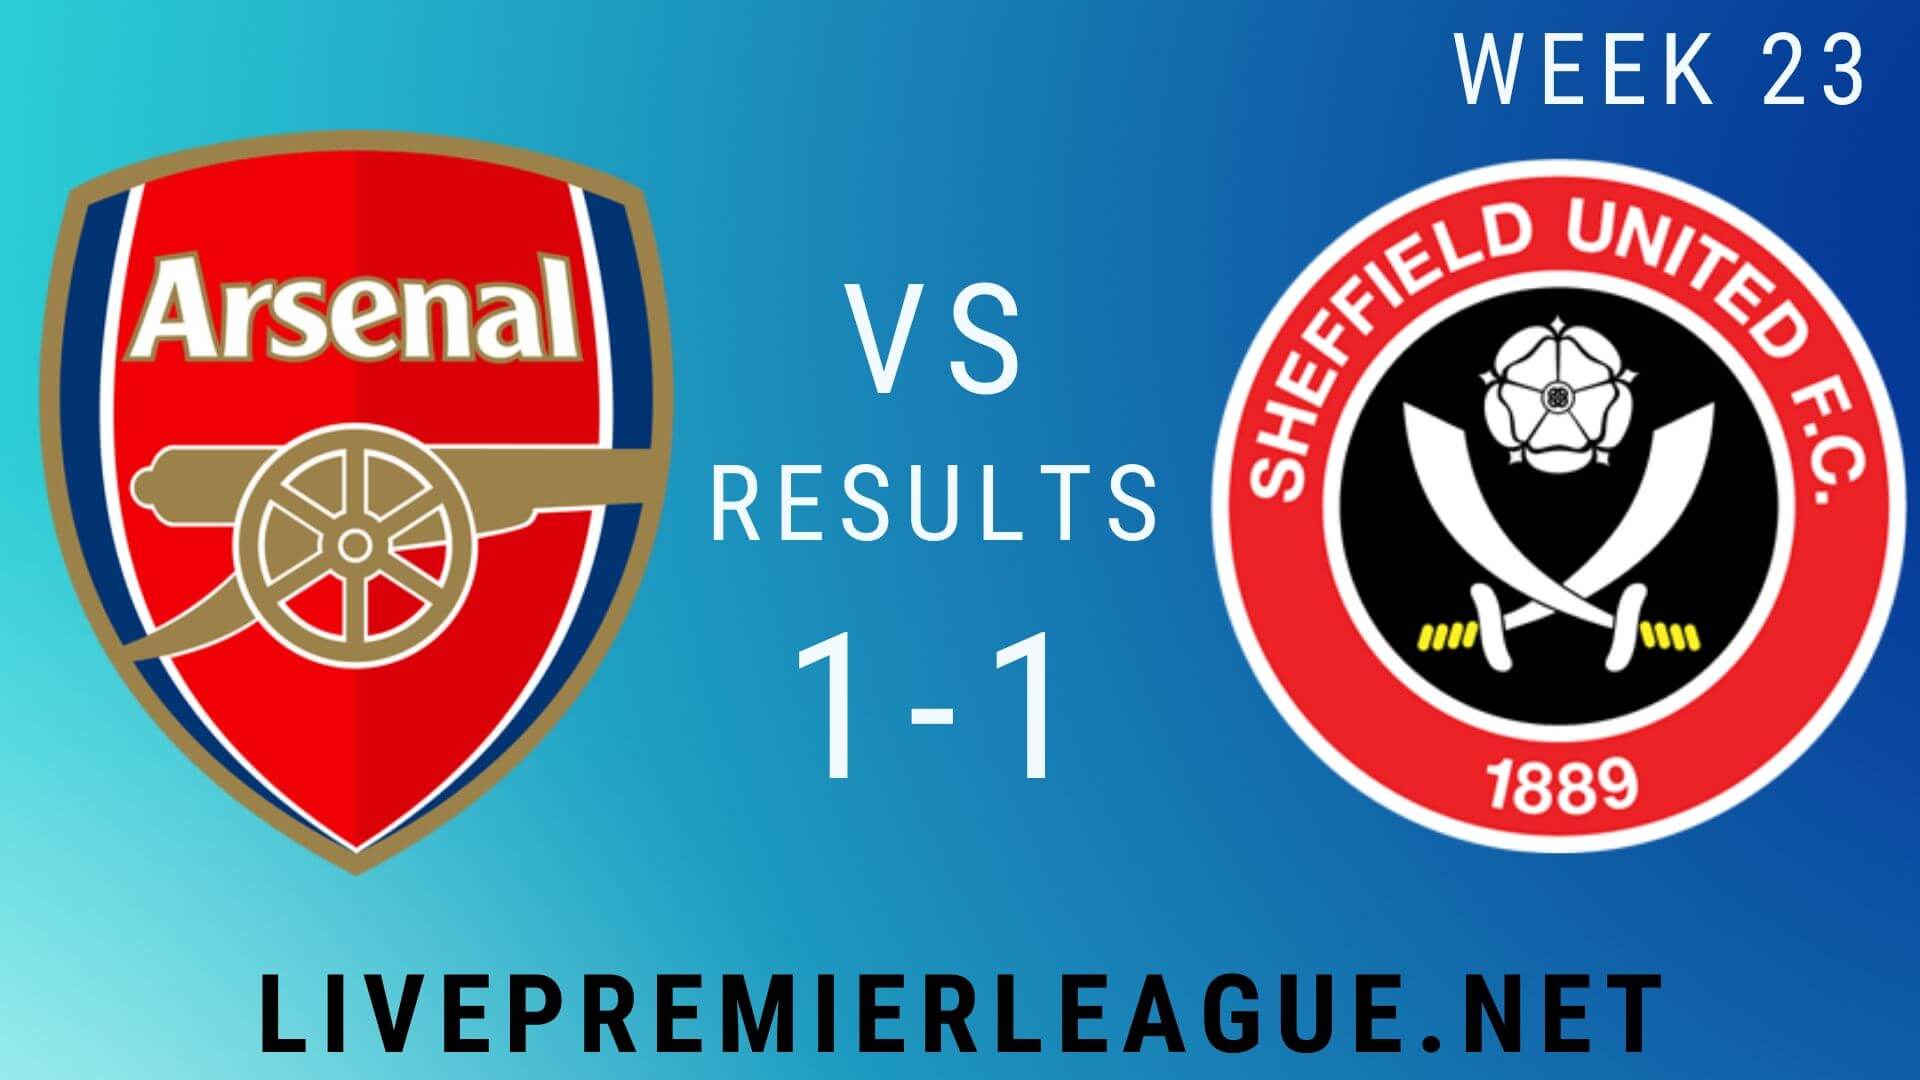 Arsenal Vs Sheffield United | Week 23 Result 2020